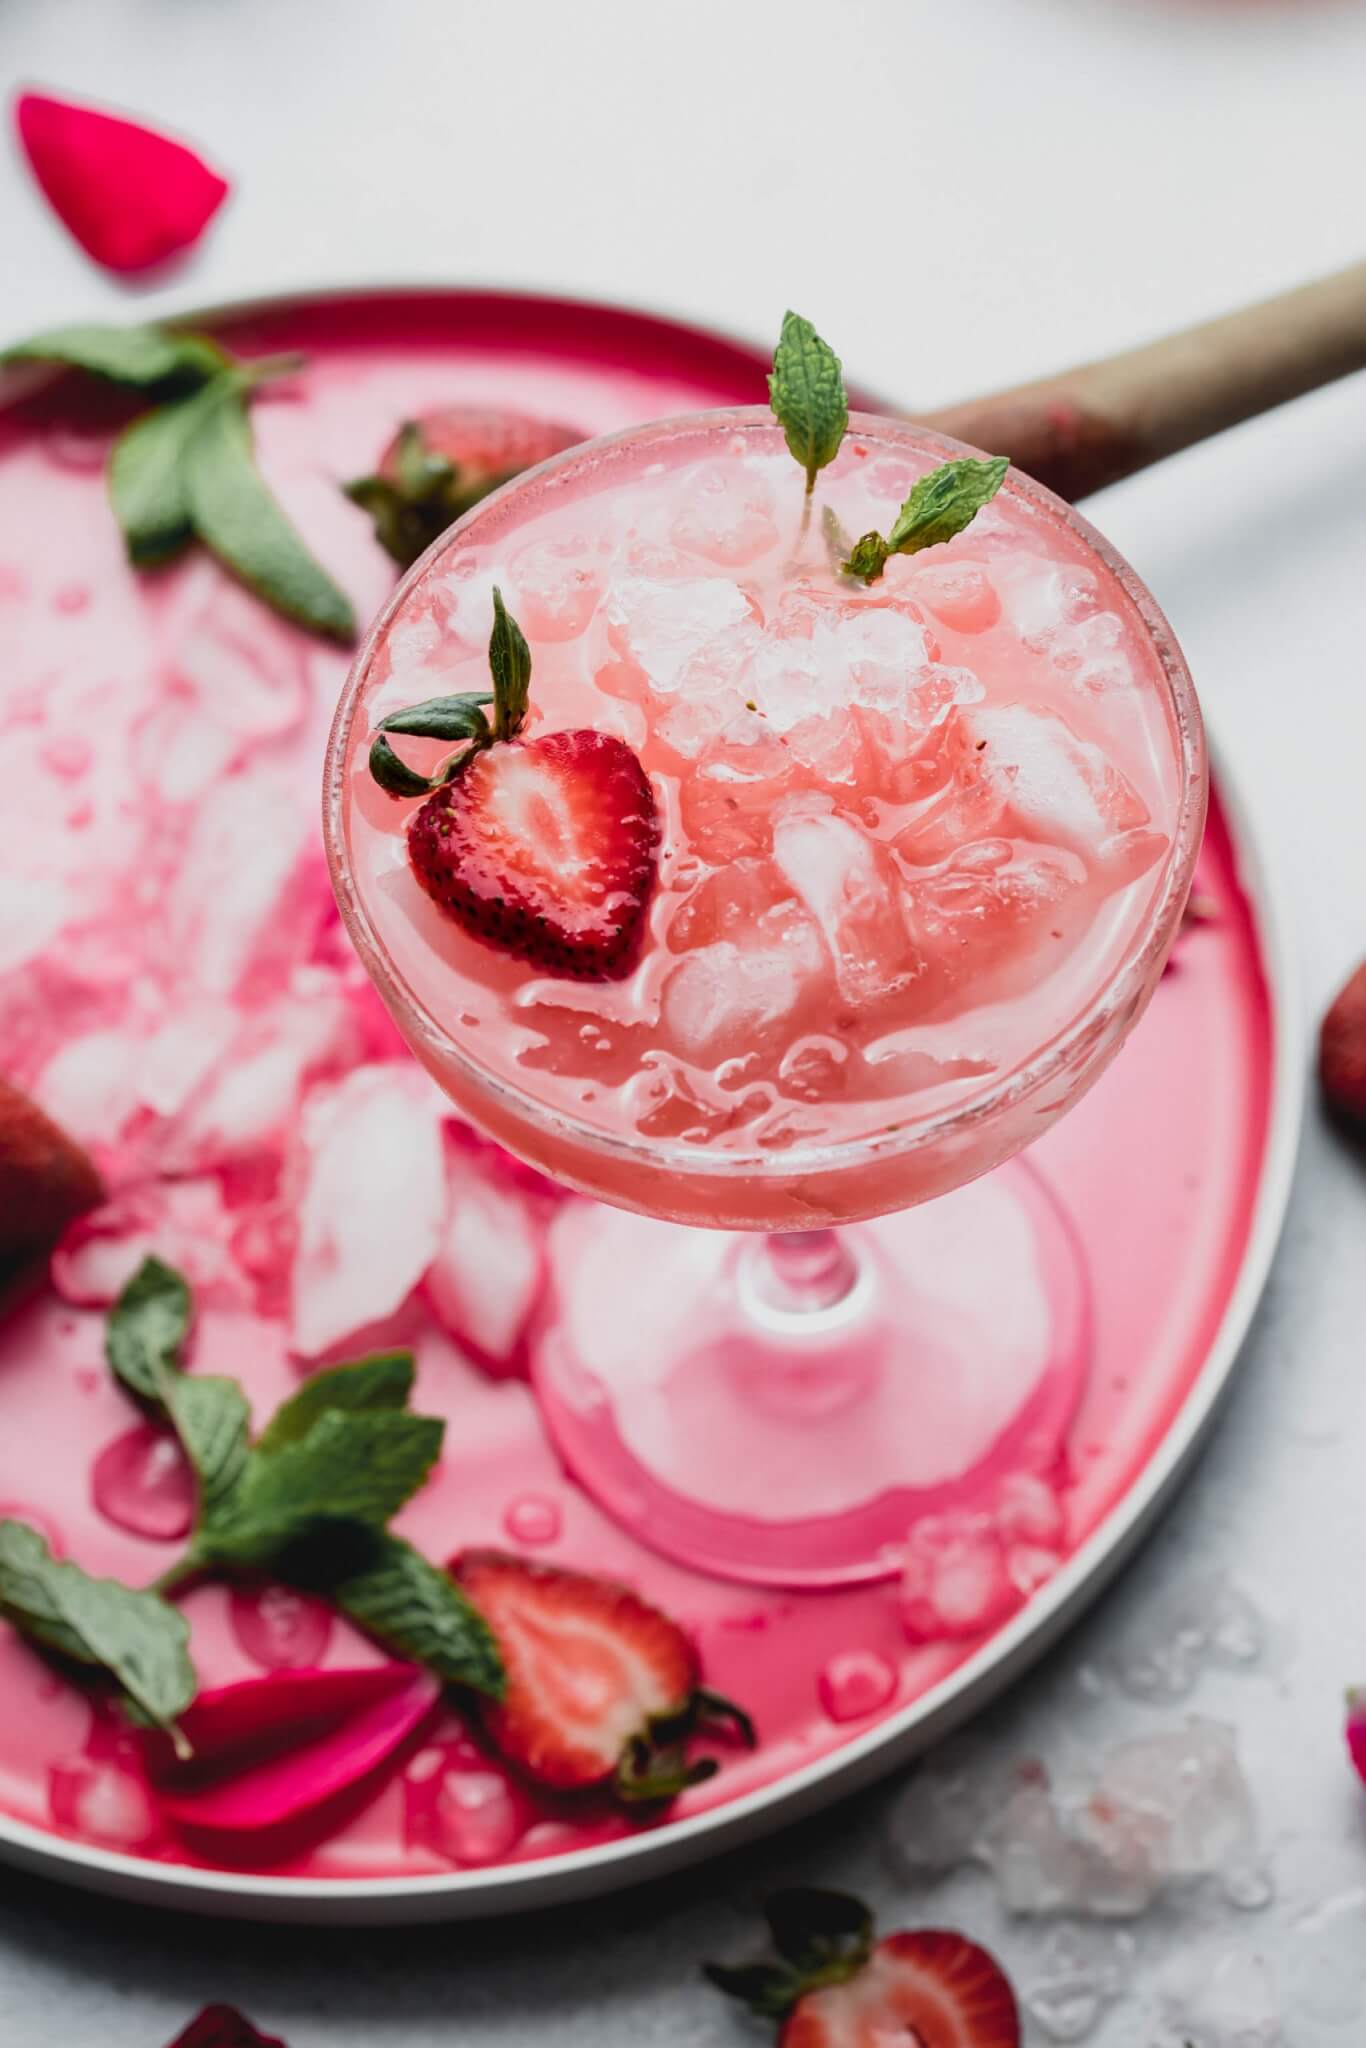 Strawberry white wine spritzer in a martini glass with strawberries